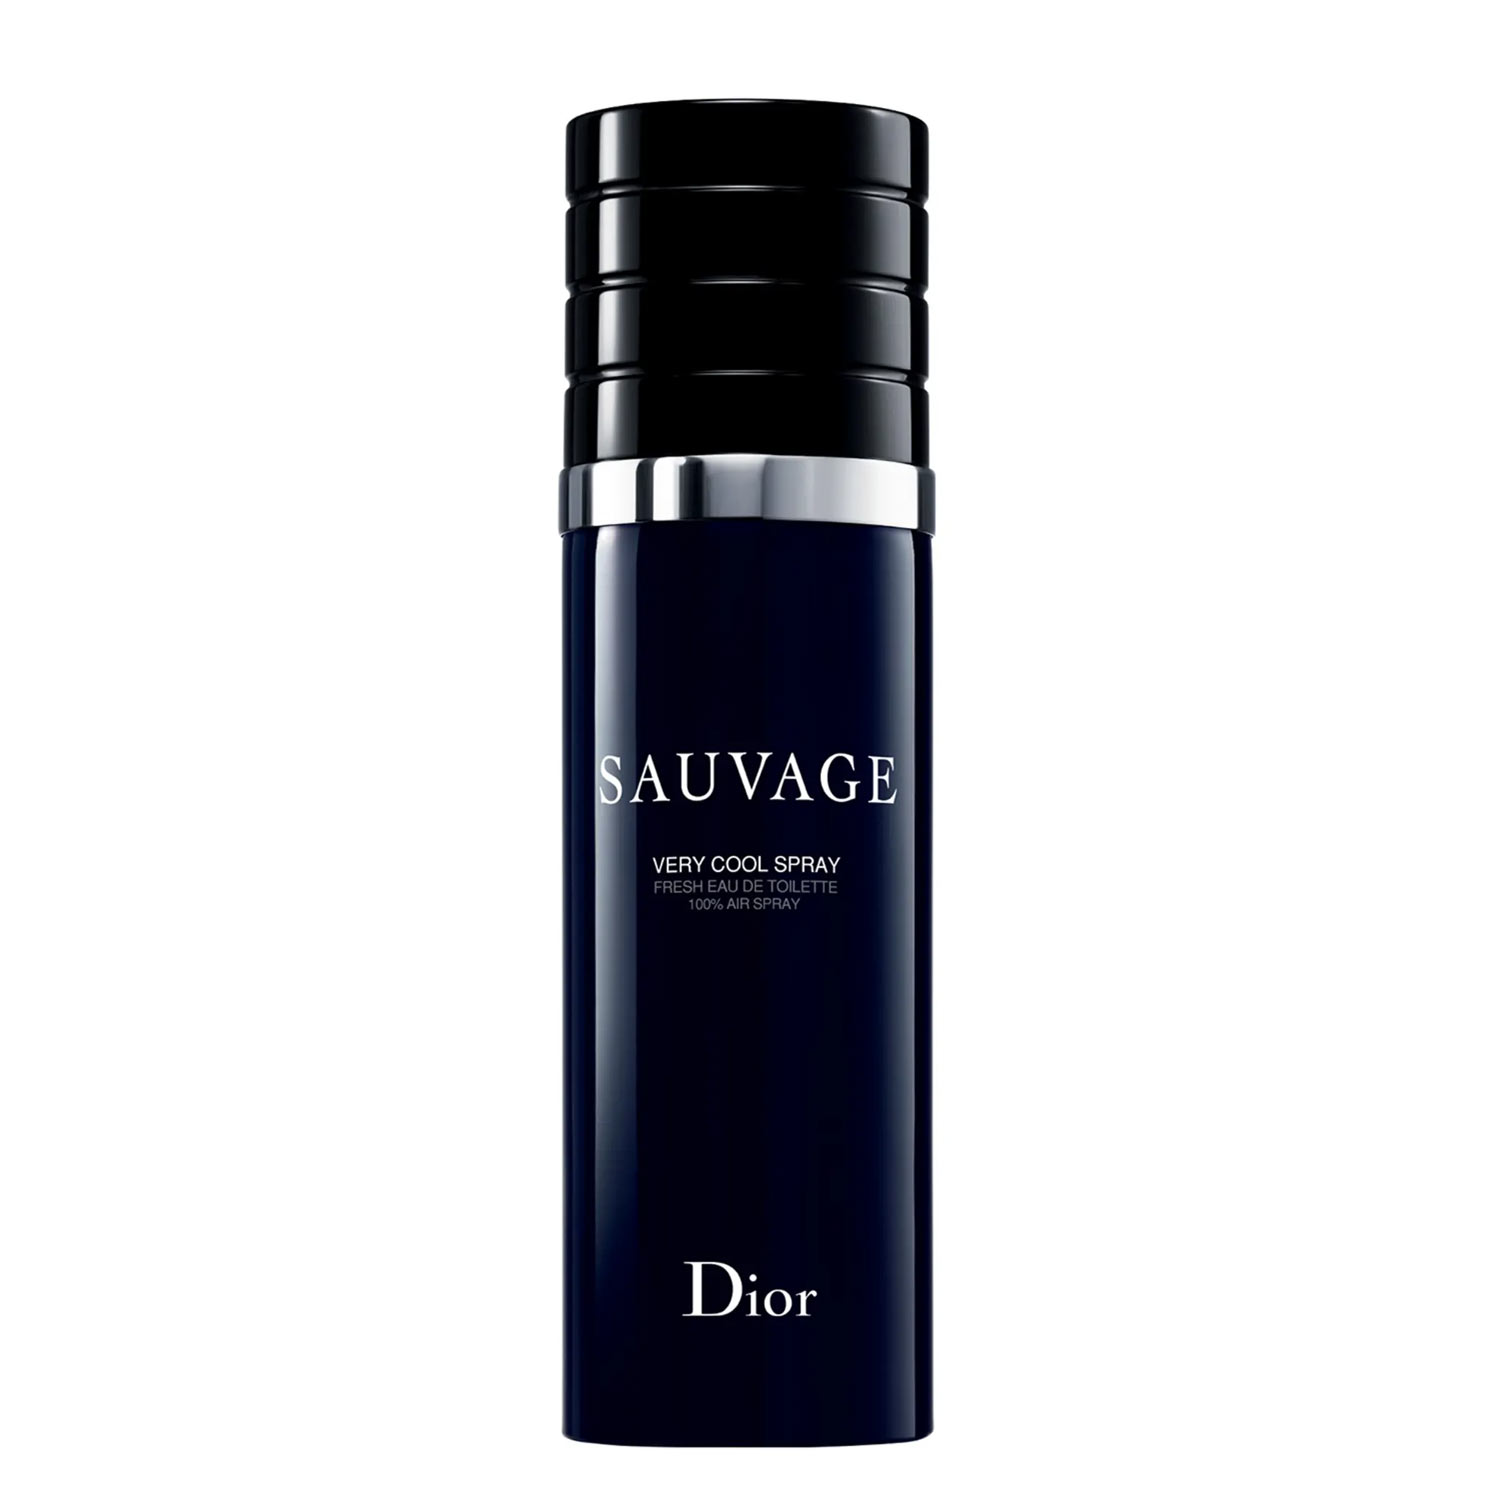 Sauvage Very Cool Spray Christian Dior Image